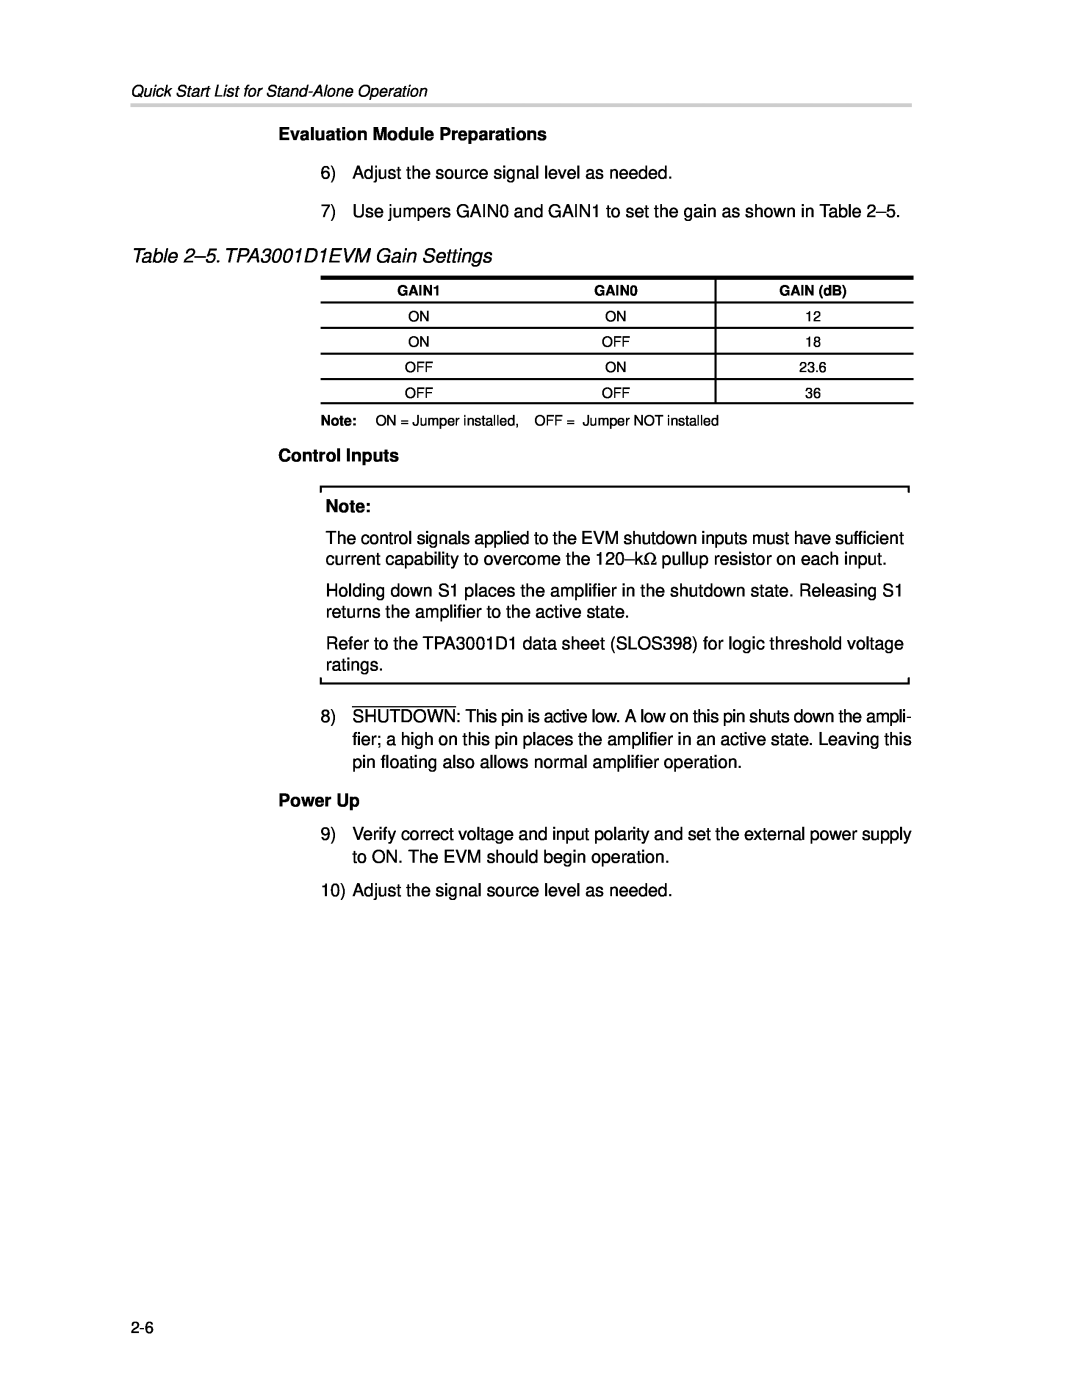 Texas Instruments manual 5.TPA3001D1EVM Gain Settings, Evaluation Module Preparations, Control Inputs, Power Up 